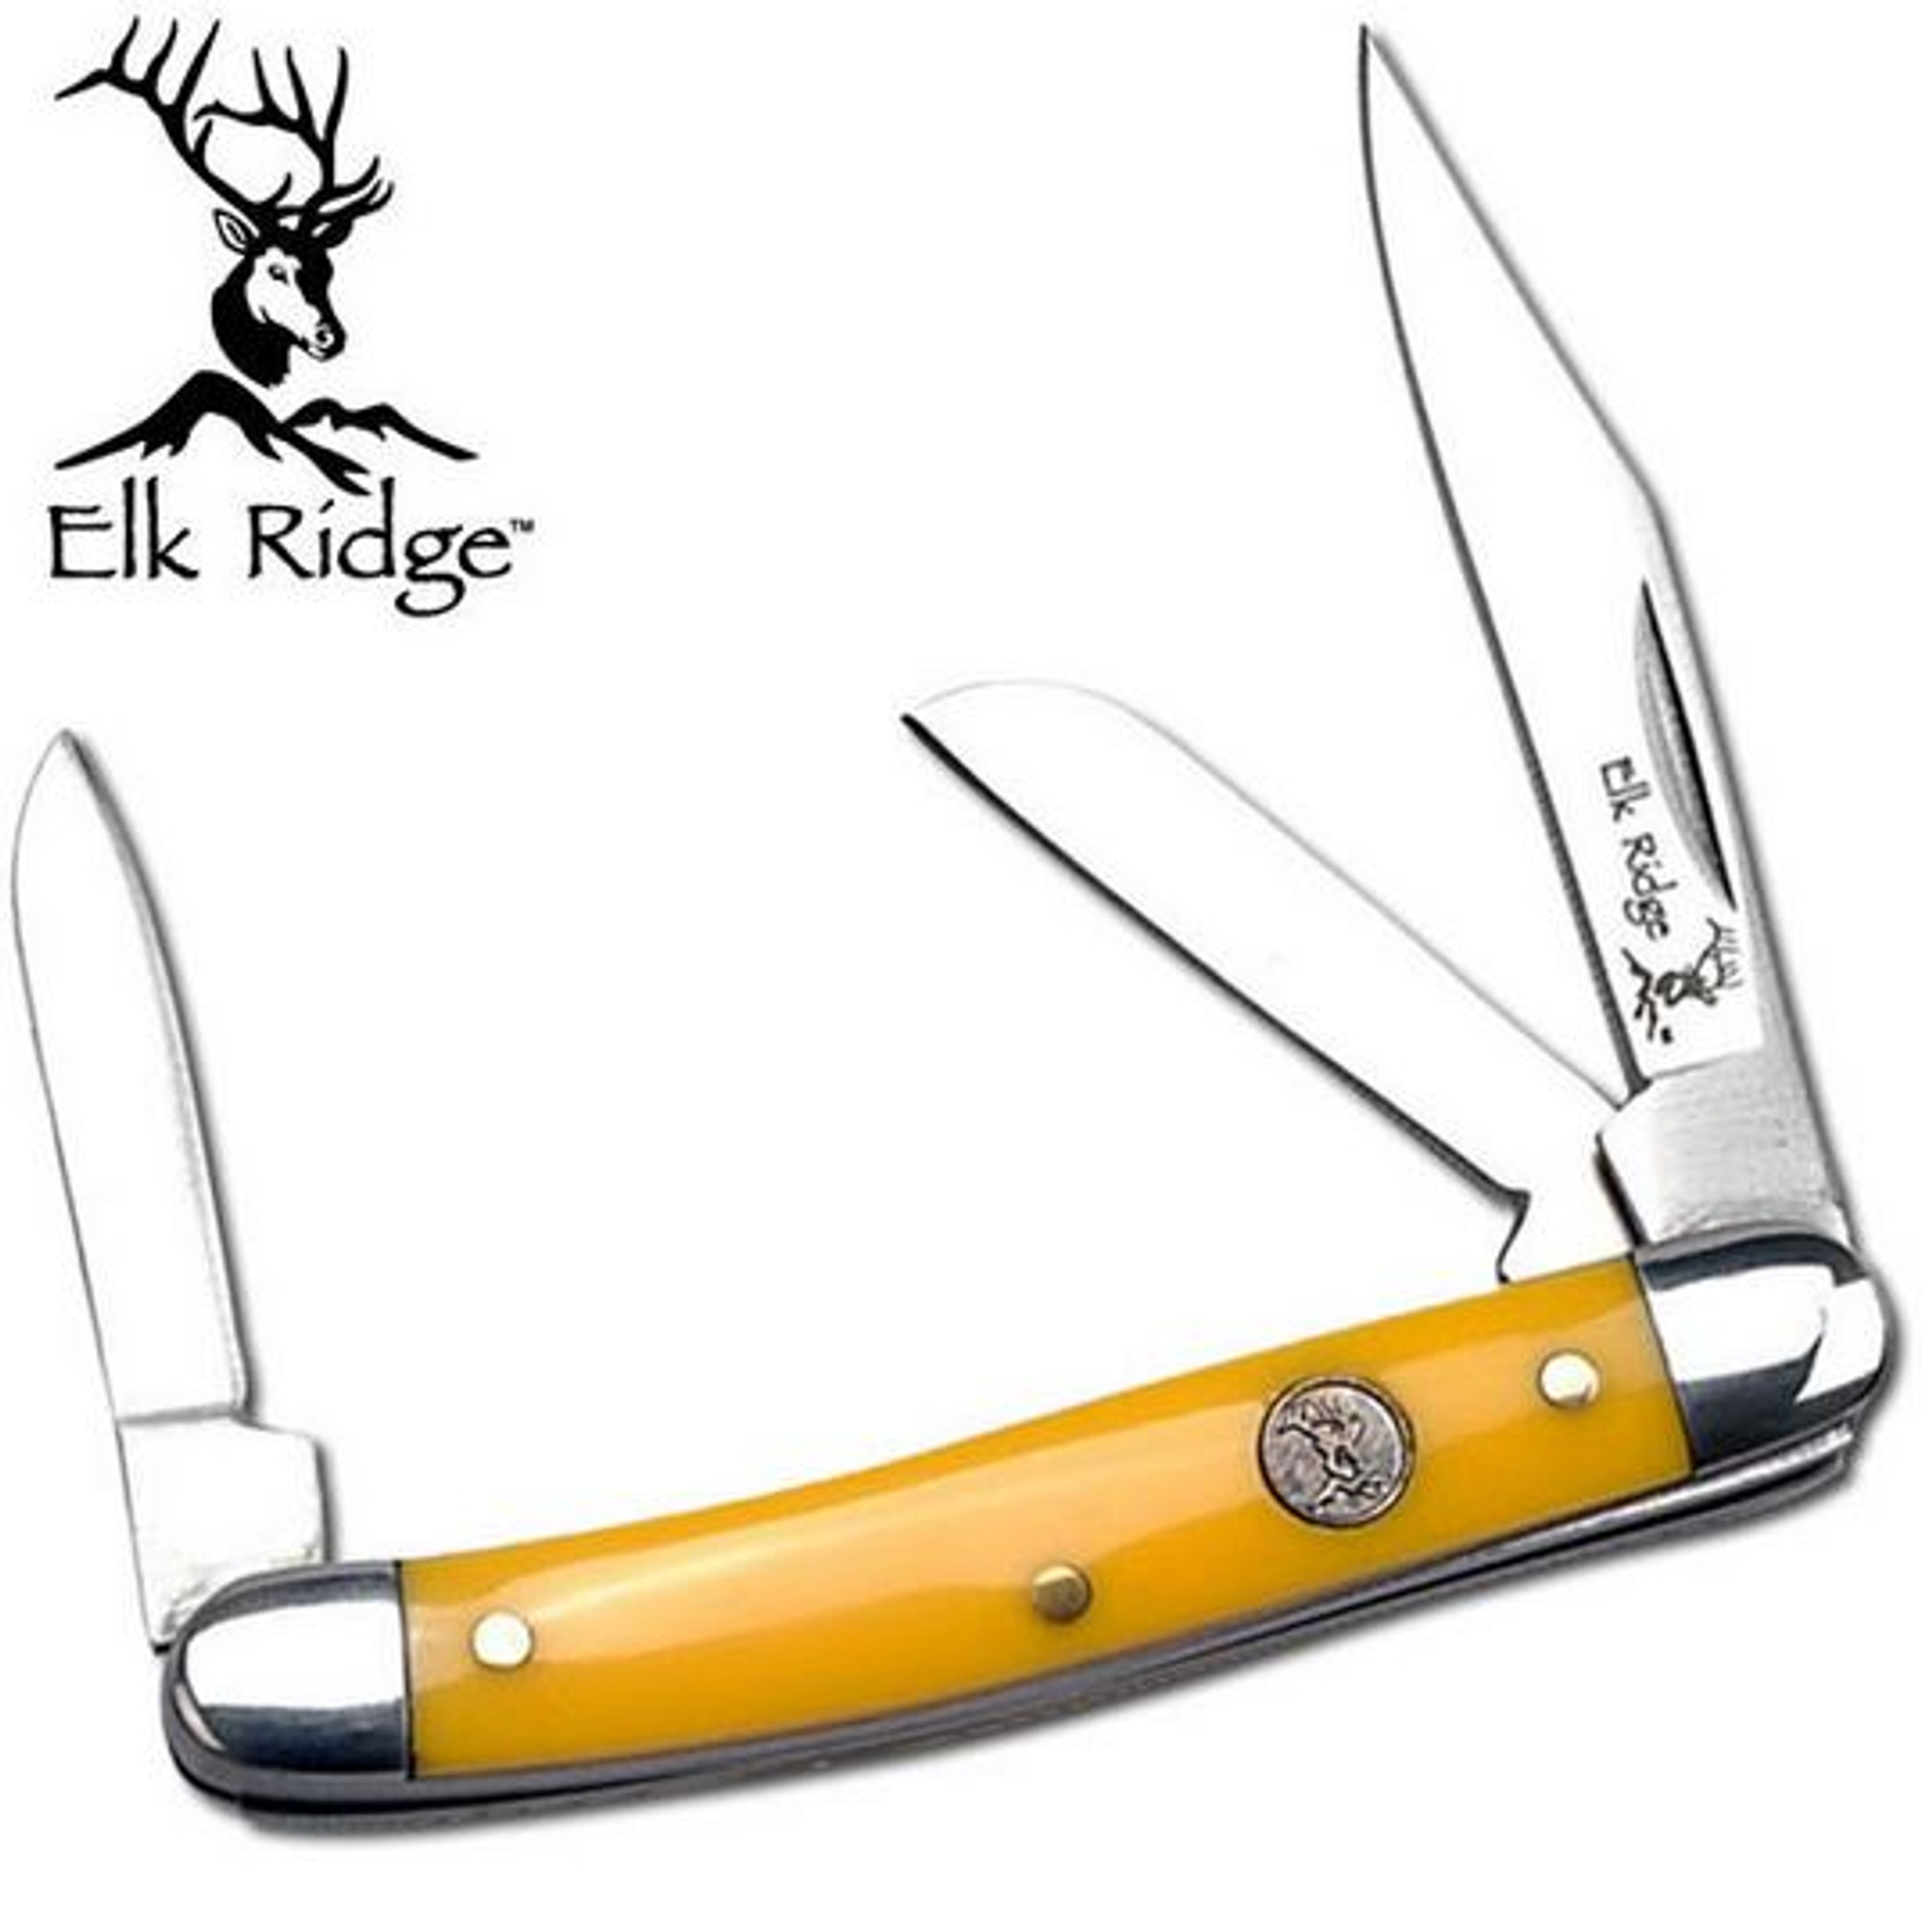 Elk Ridge ER323SY Small Stockman Yellow